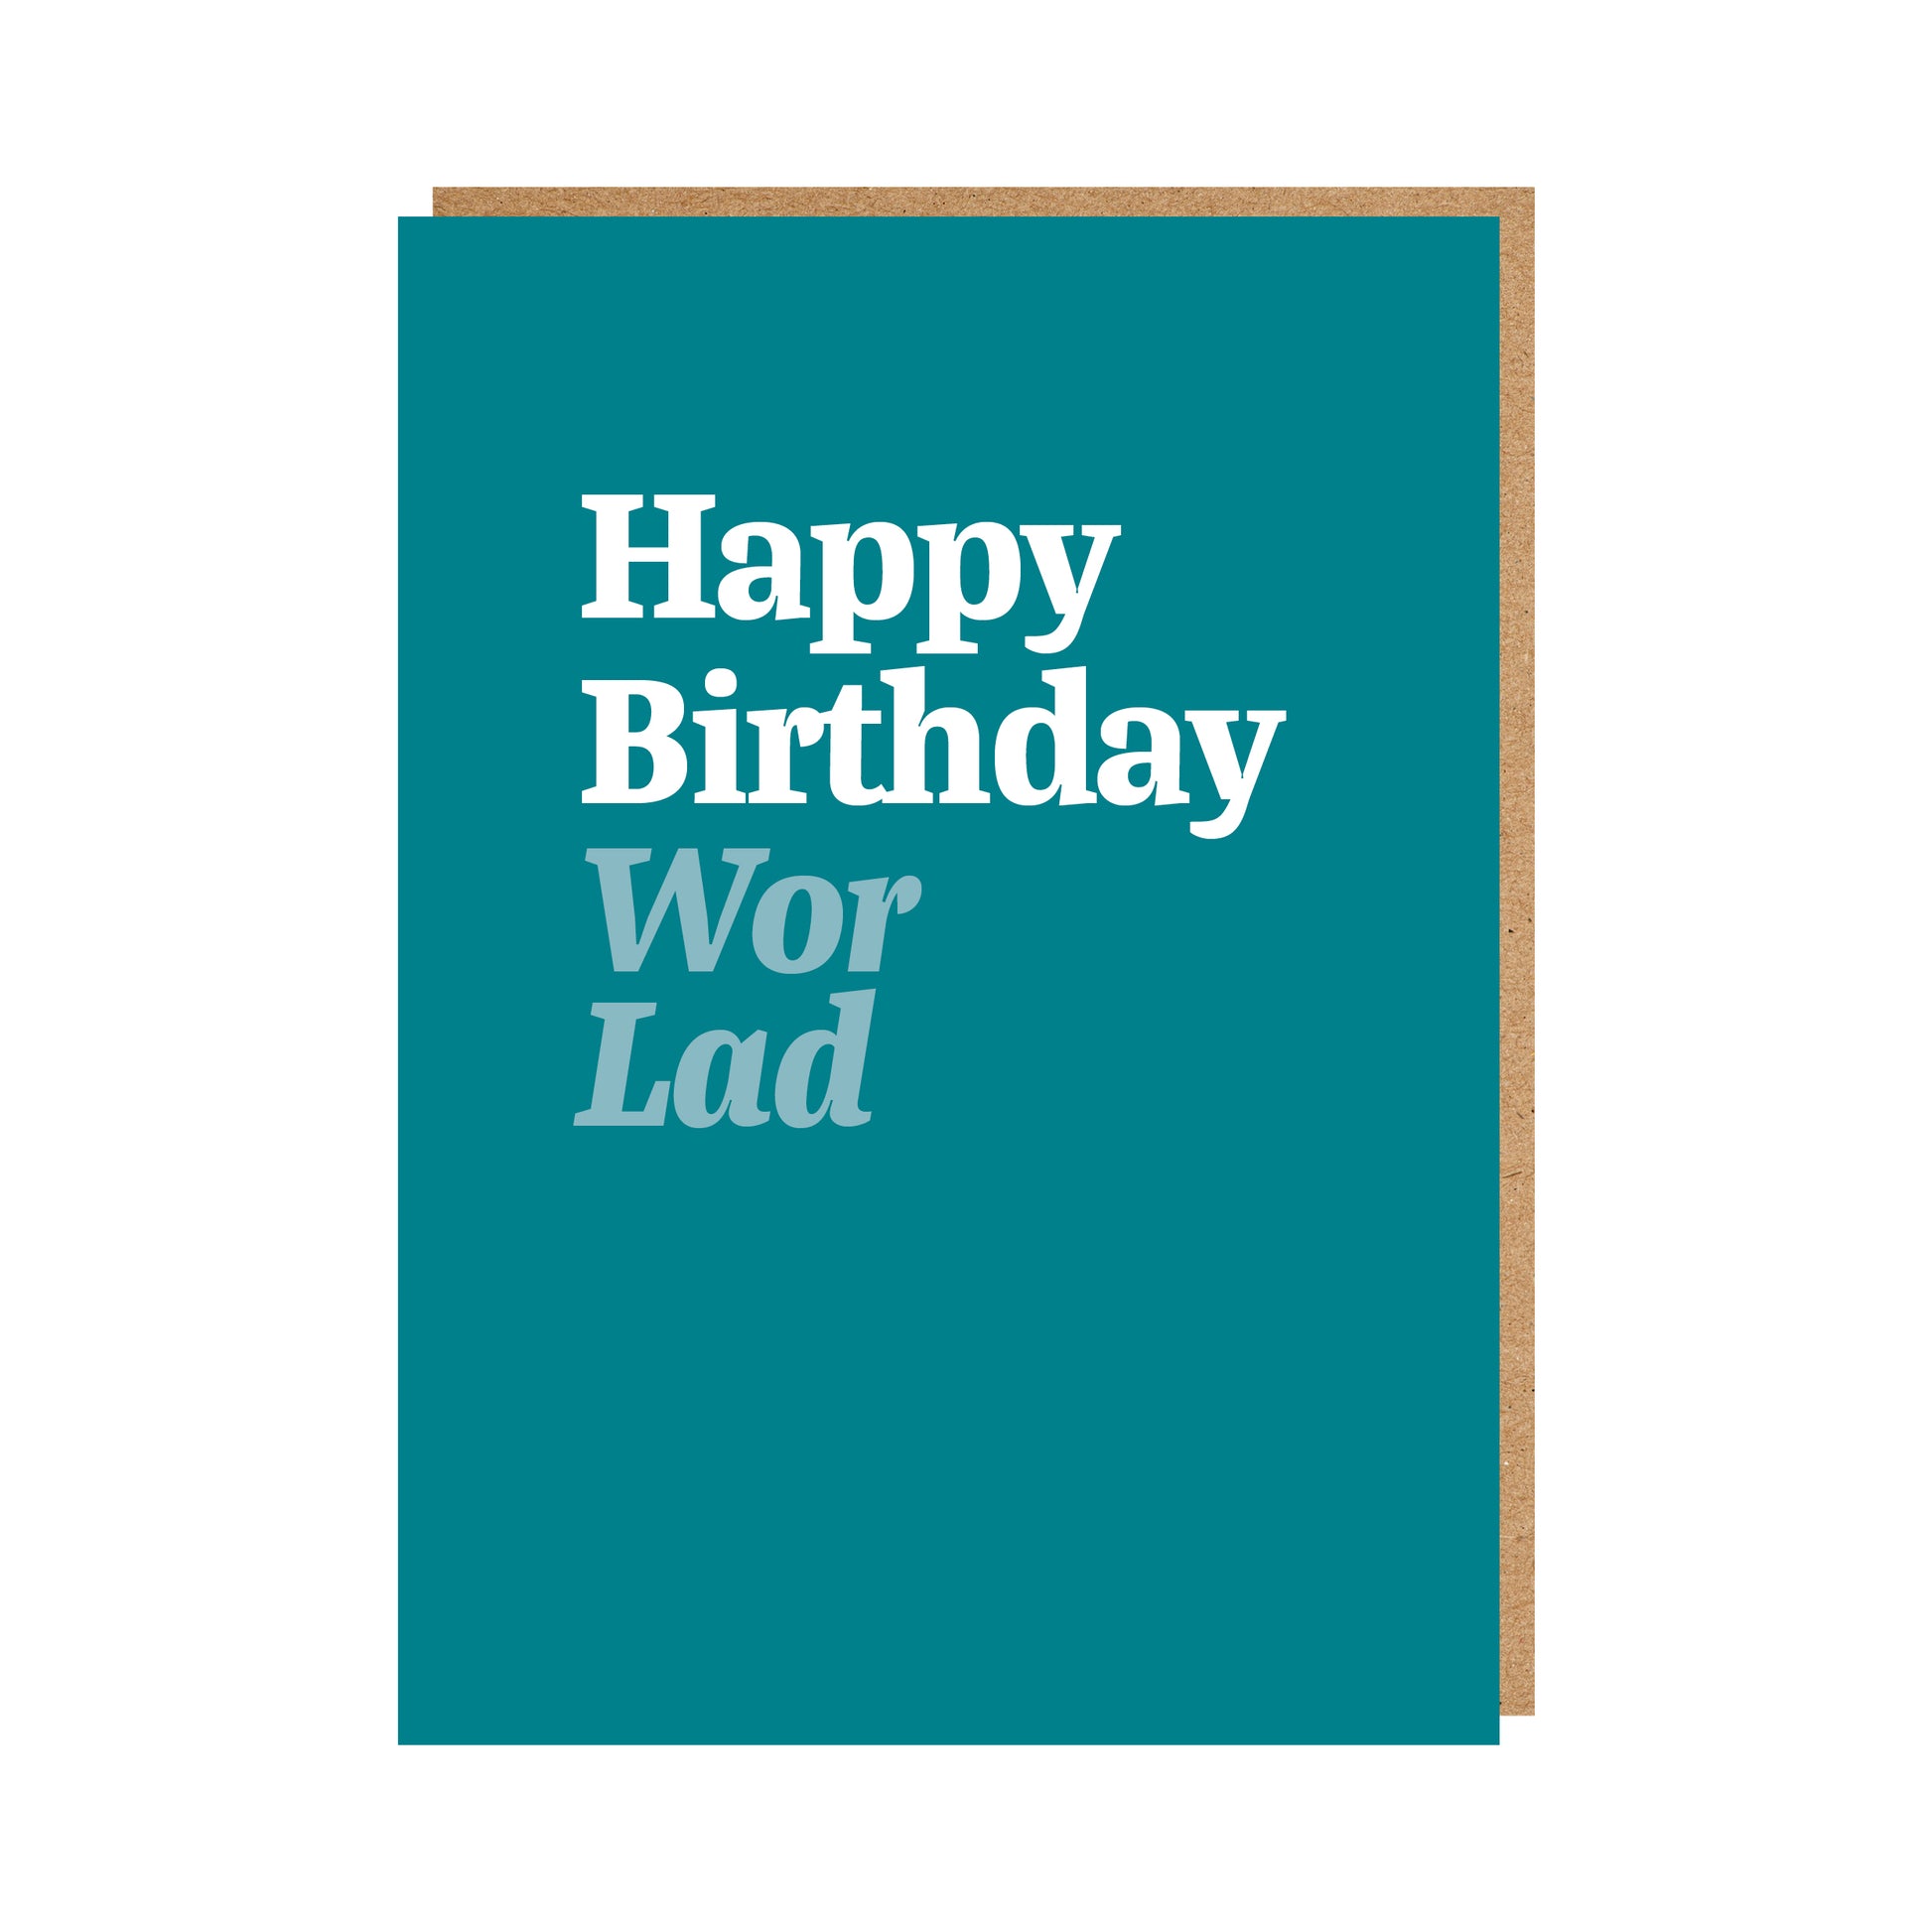 Geordie Boyfriend Card text reads "Happy Birthday Wor Lad"